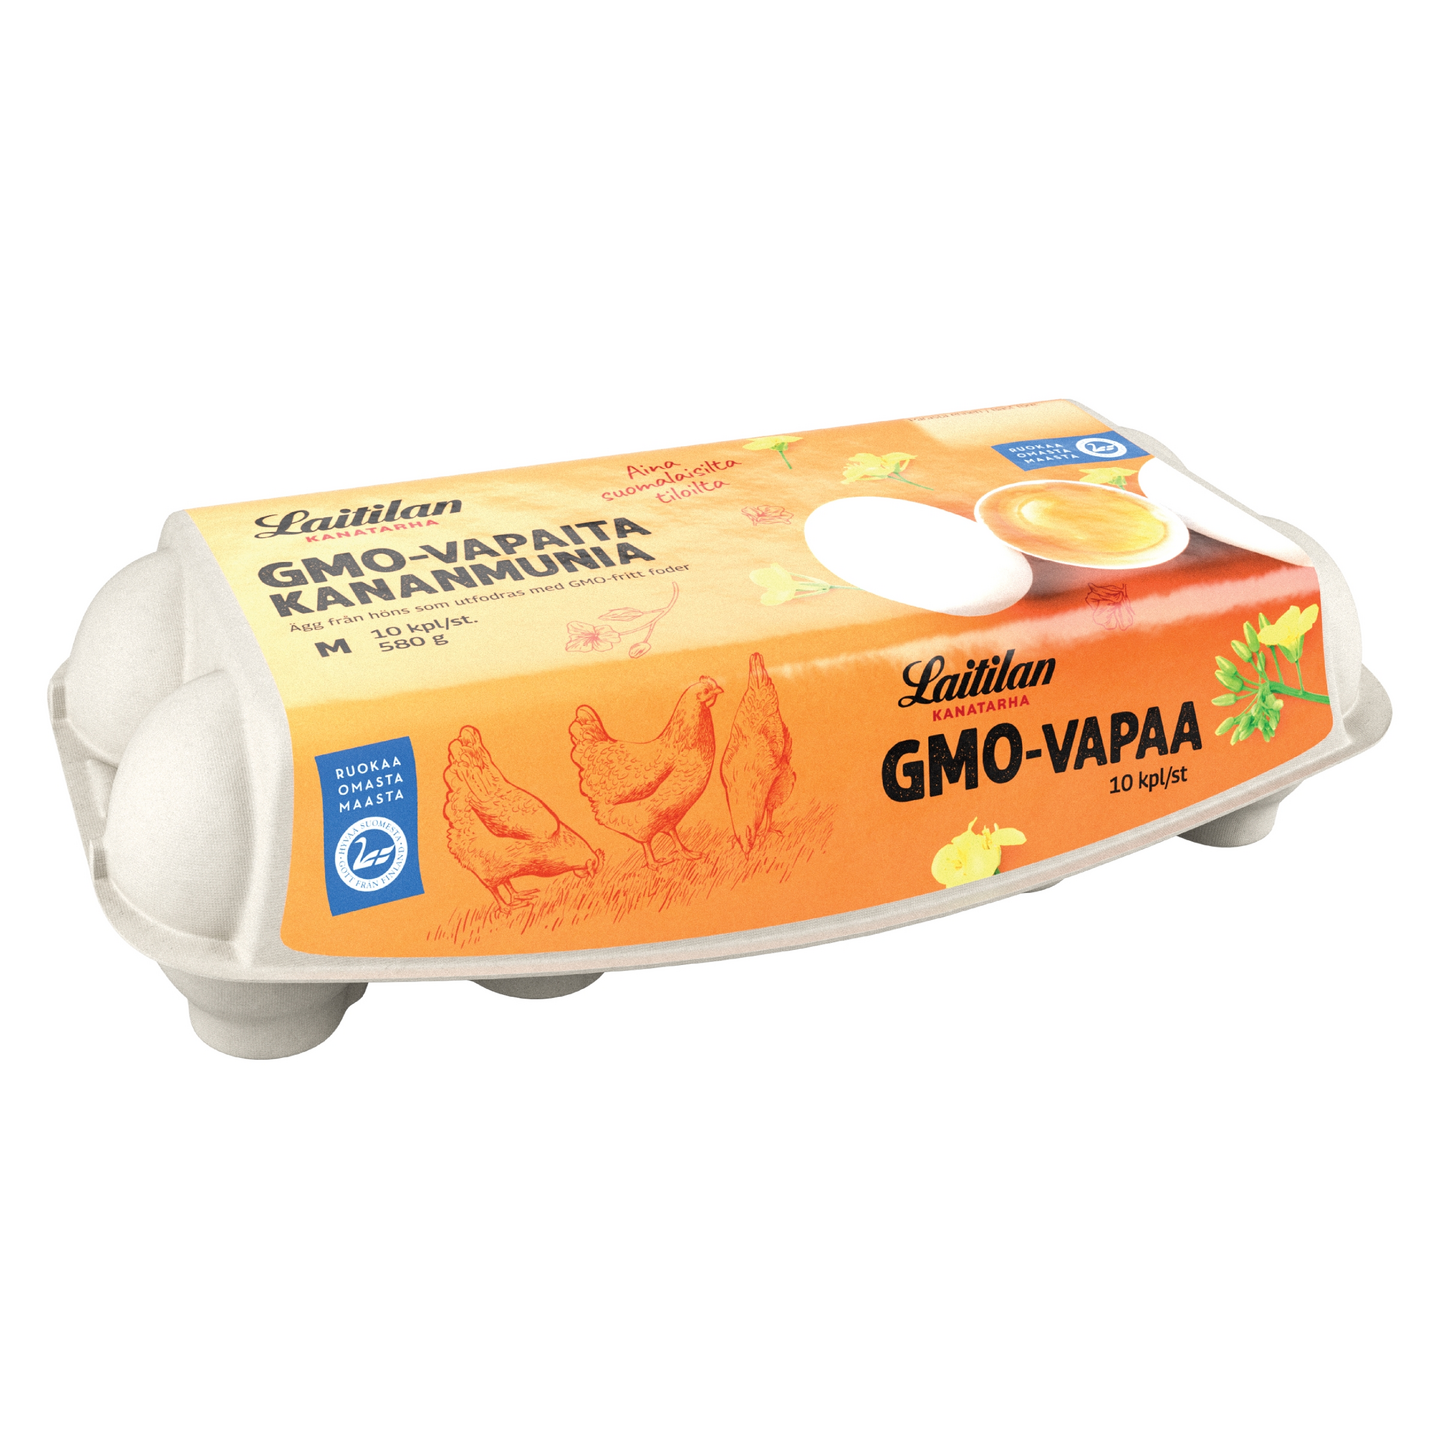 Laitilan Kanatarhan GMO-vapaa vapaan kanan kananmuna M10 580g